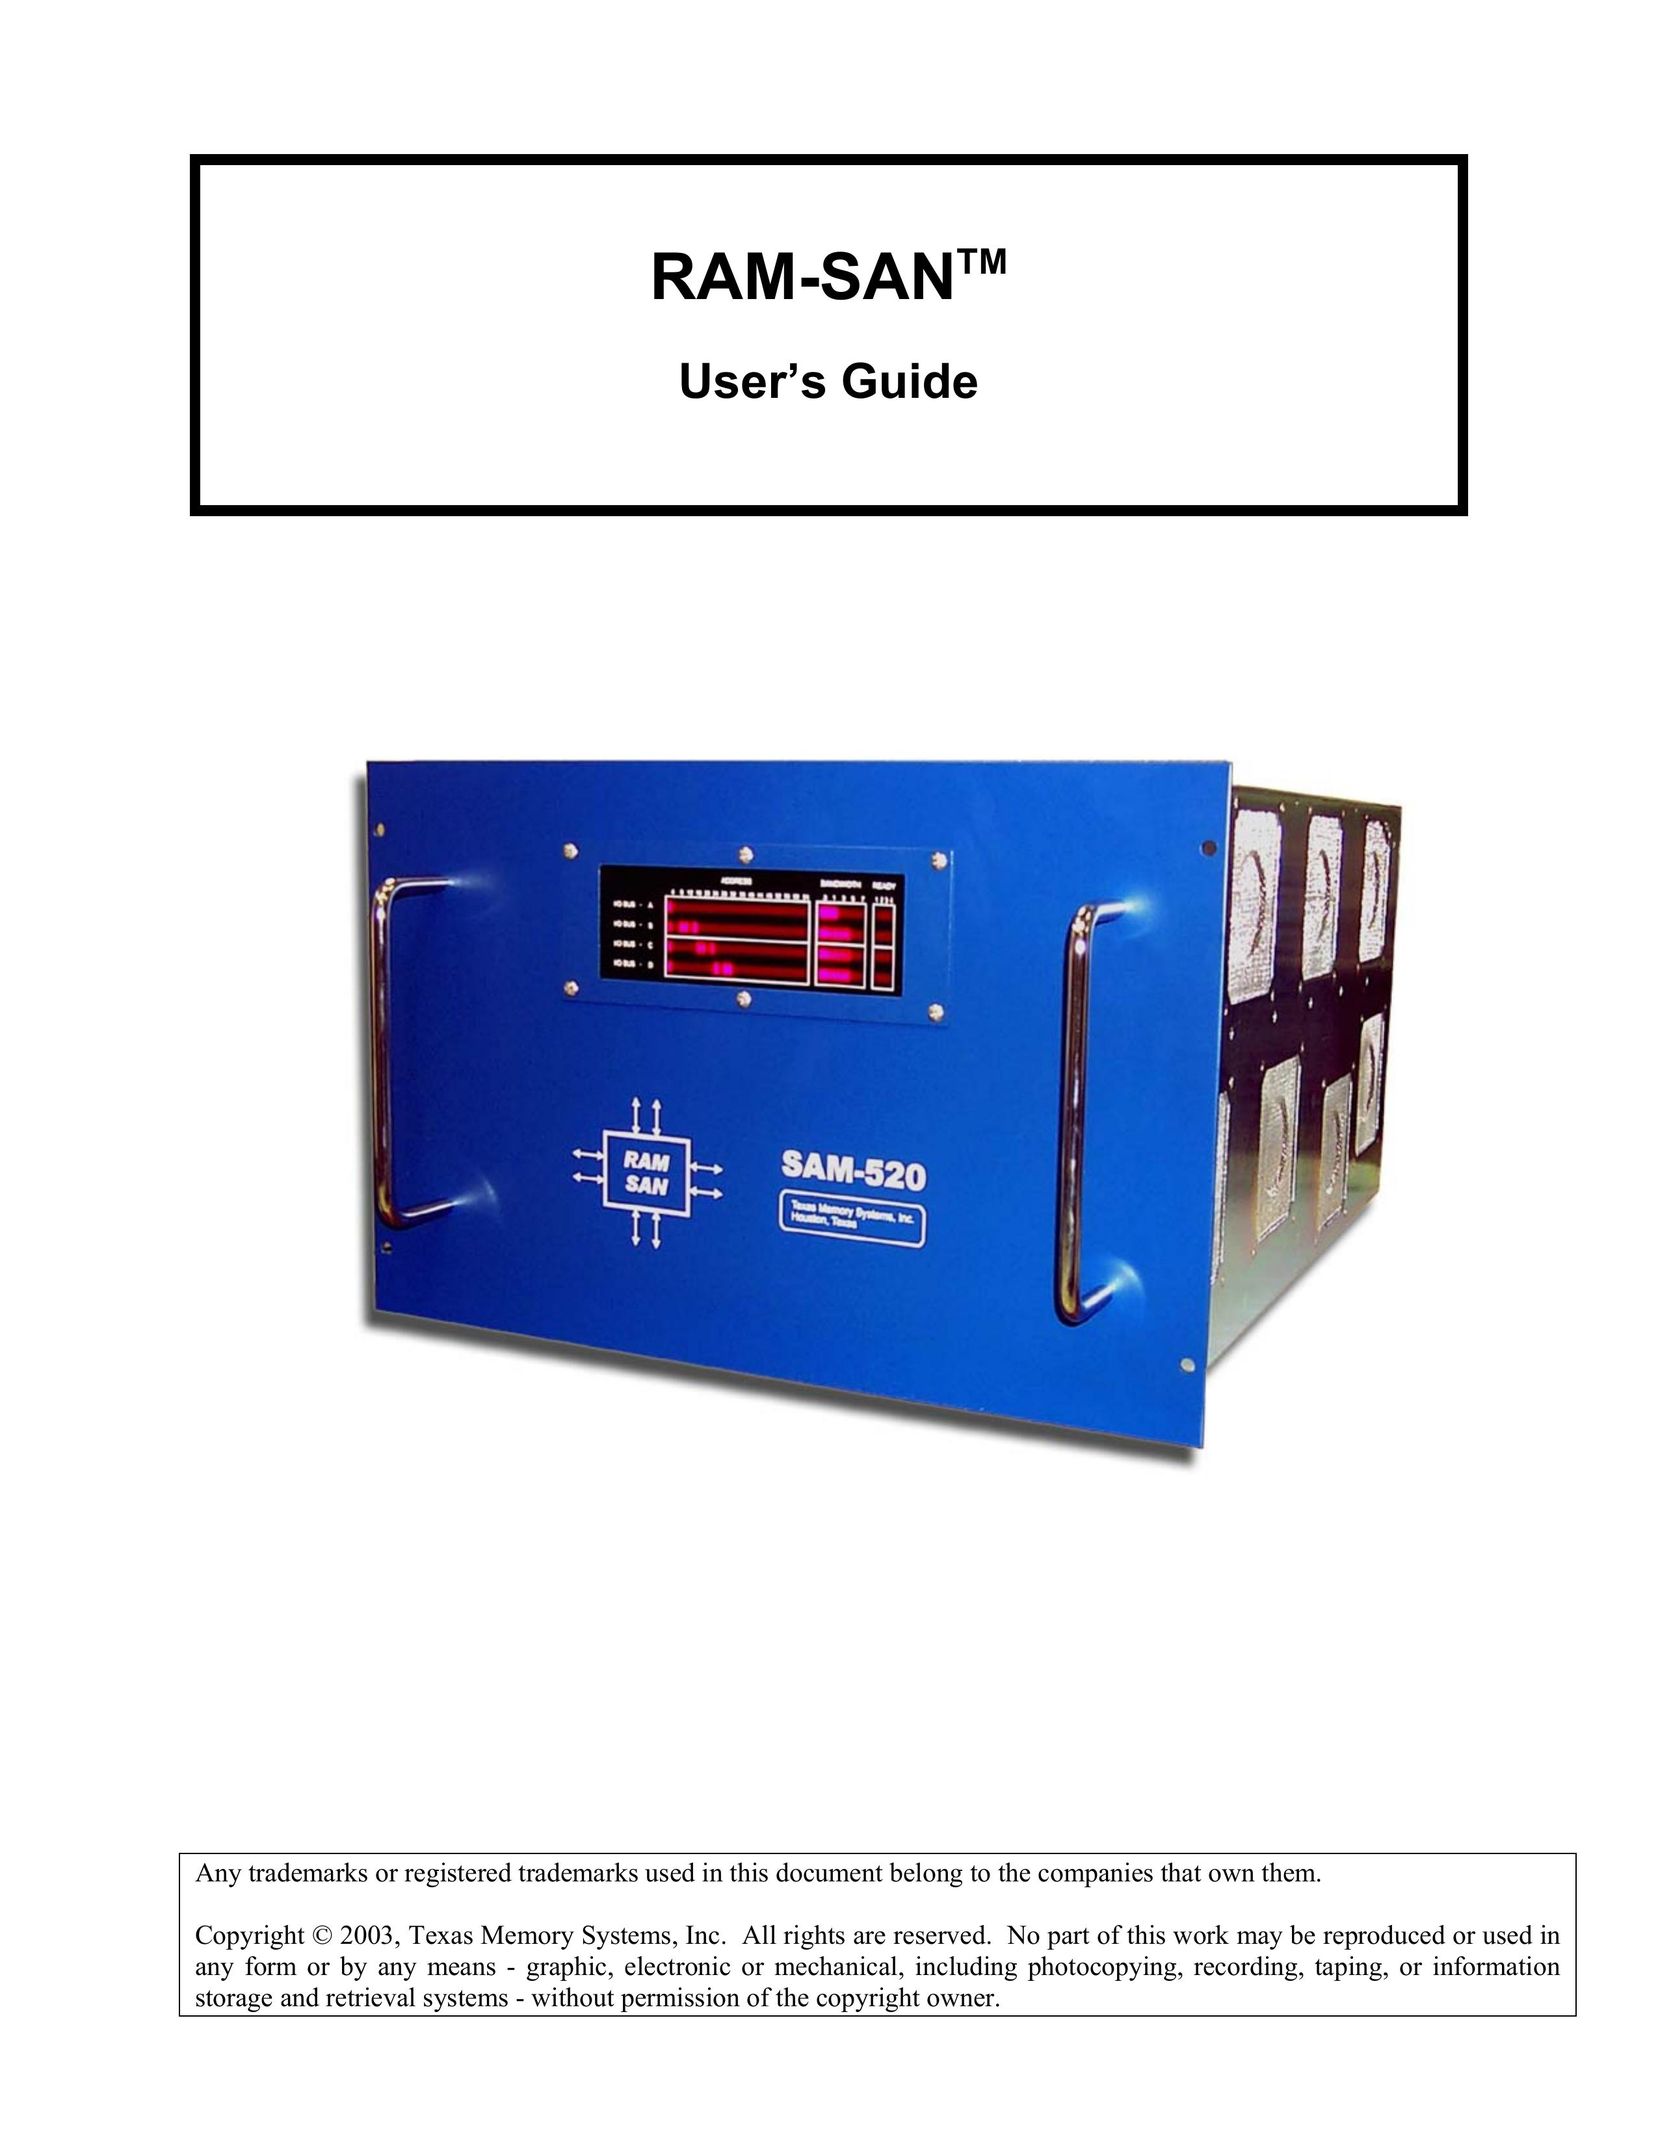 Texas Memory Systems RAM-SAN 520 Power Supply User Manual